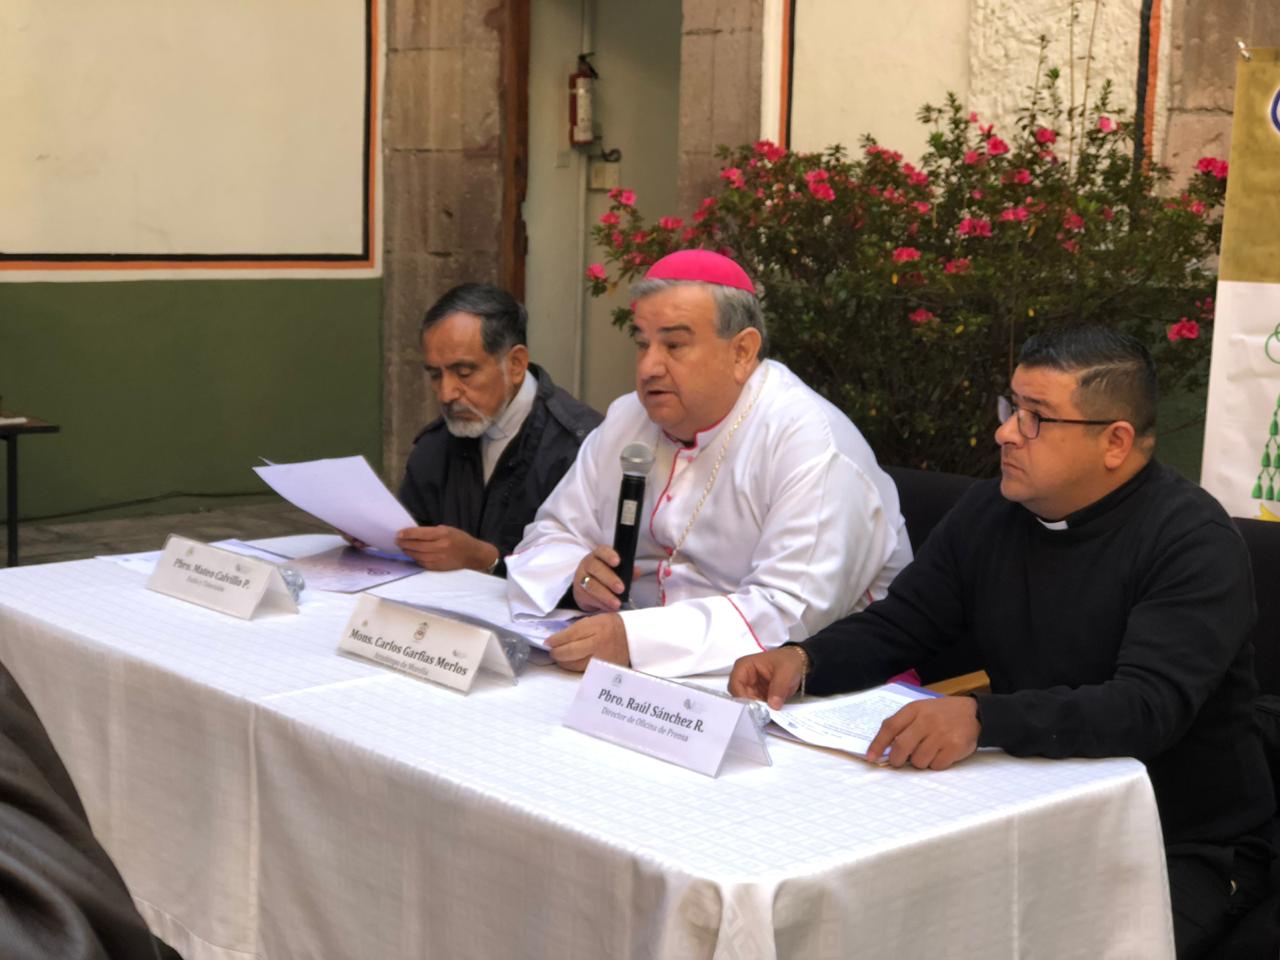 Fomentar educación humanizada, pide arzobispo a rector nicolaita